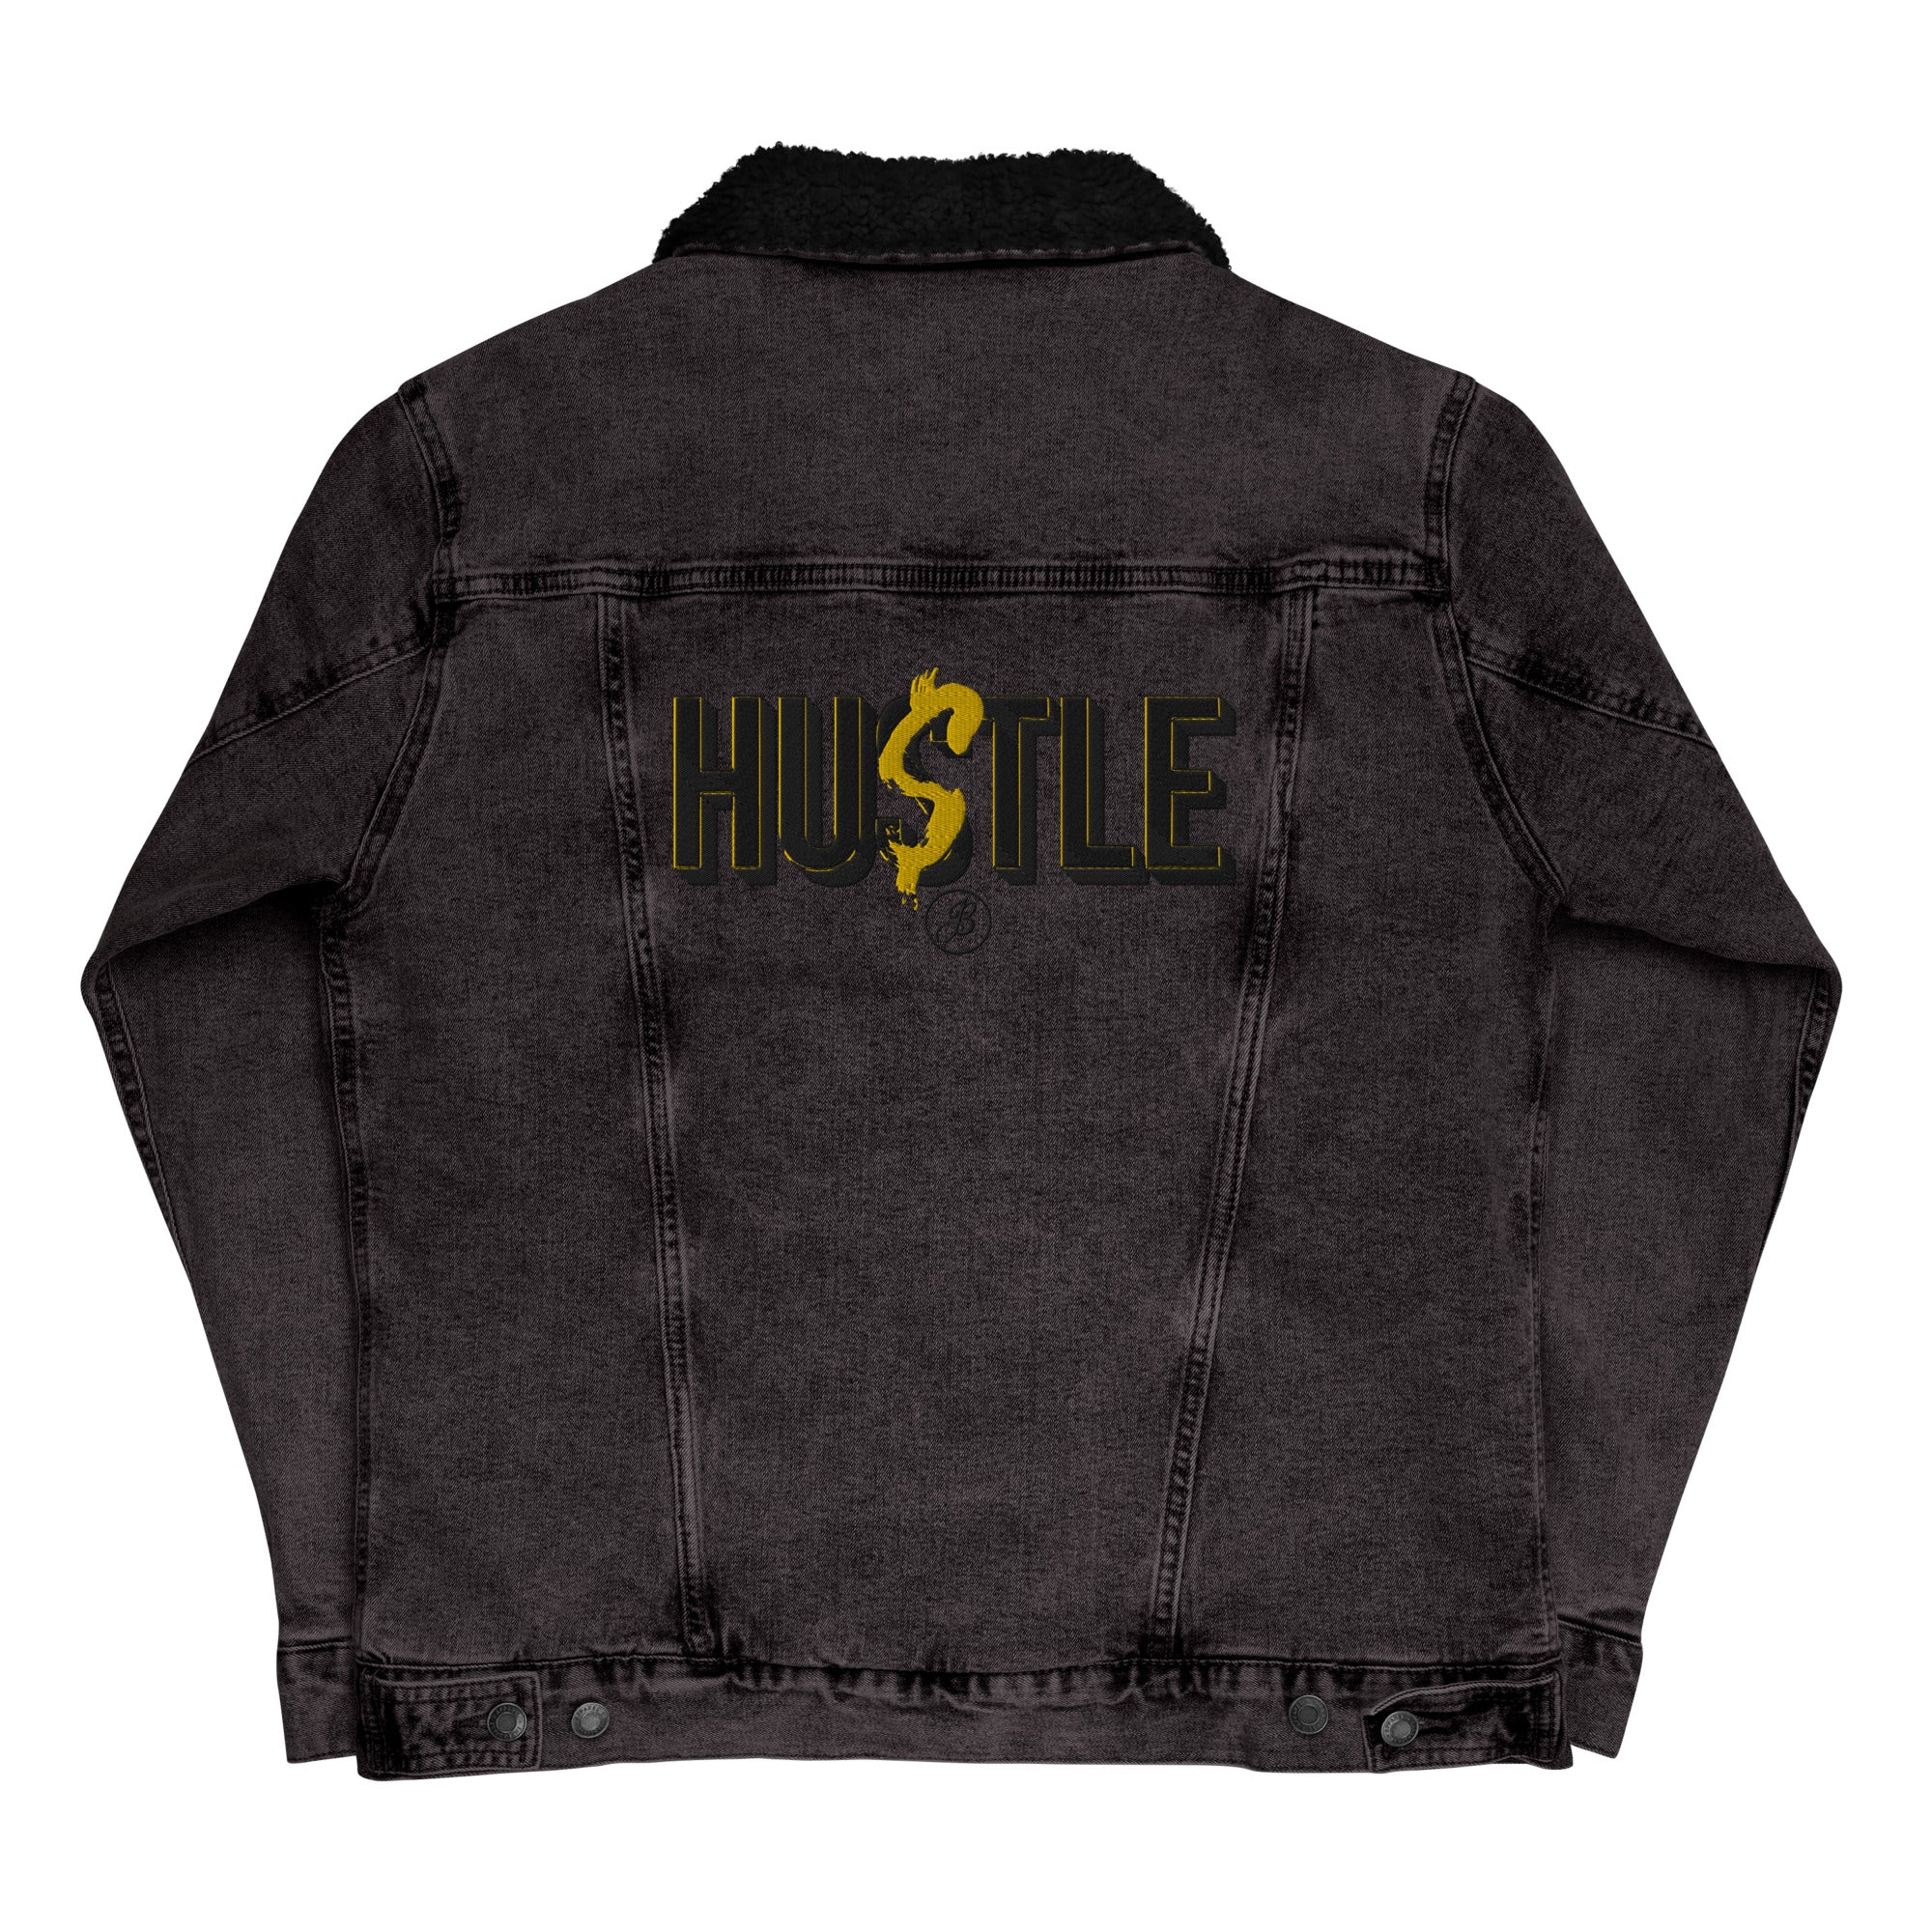 Hustle Black denim sherpa jacket